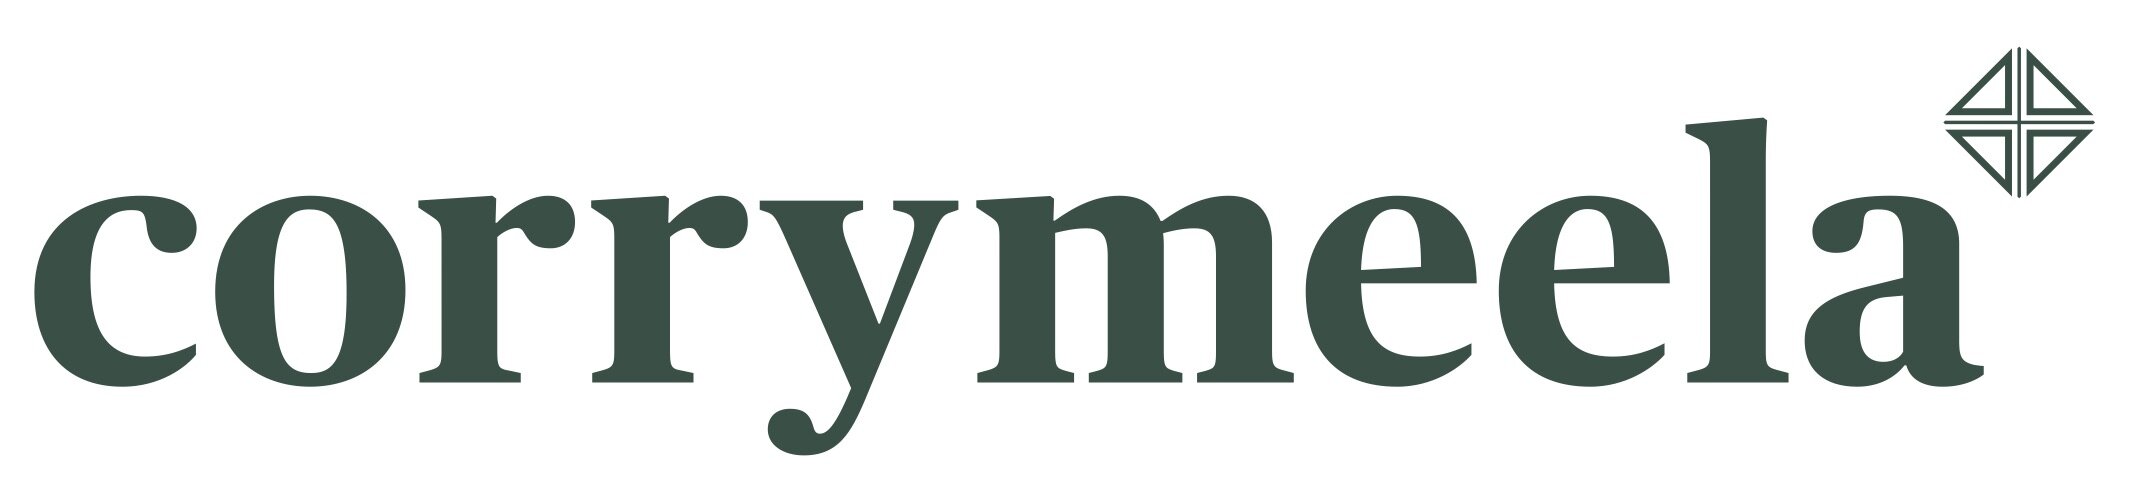 Corrymeela Logo [Green] copy.jpg